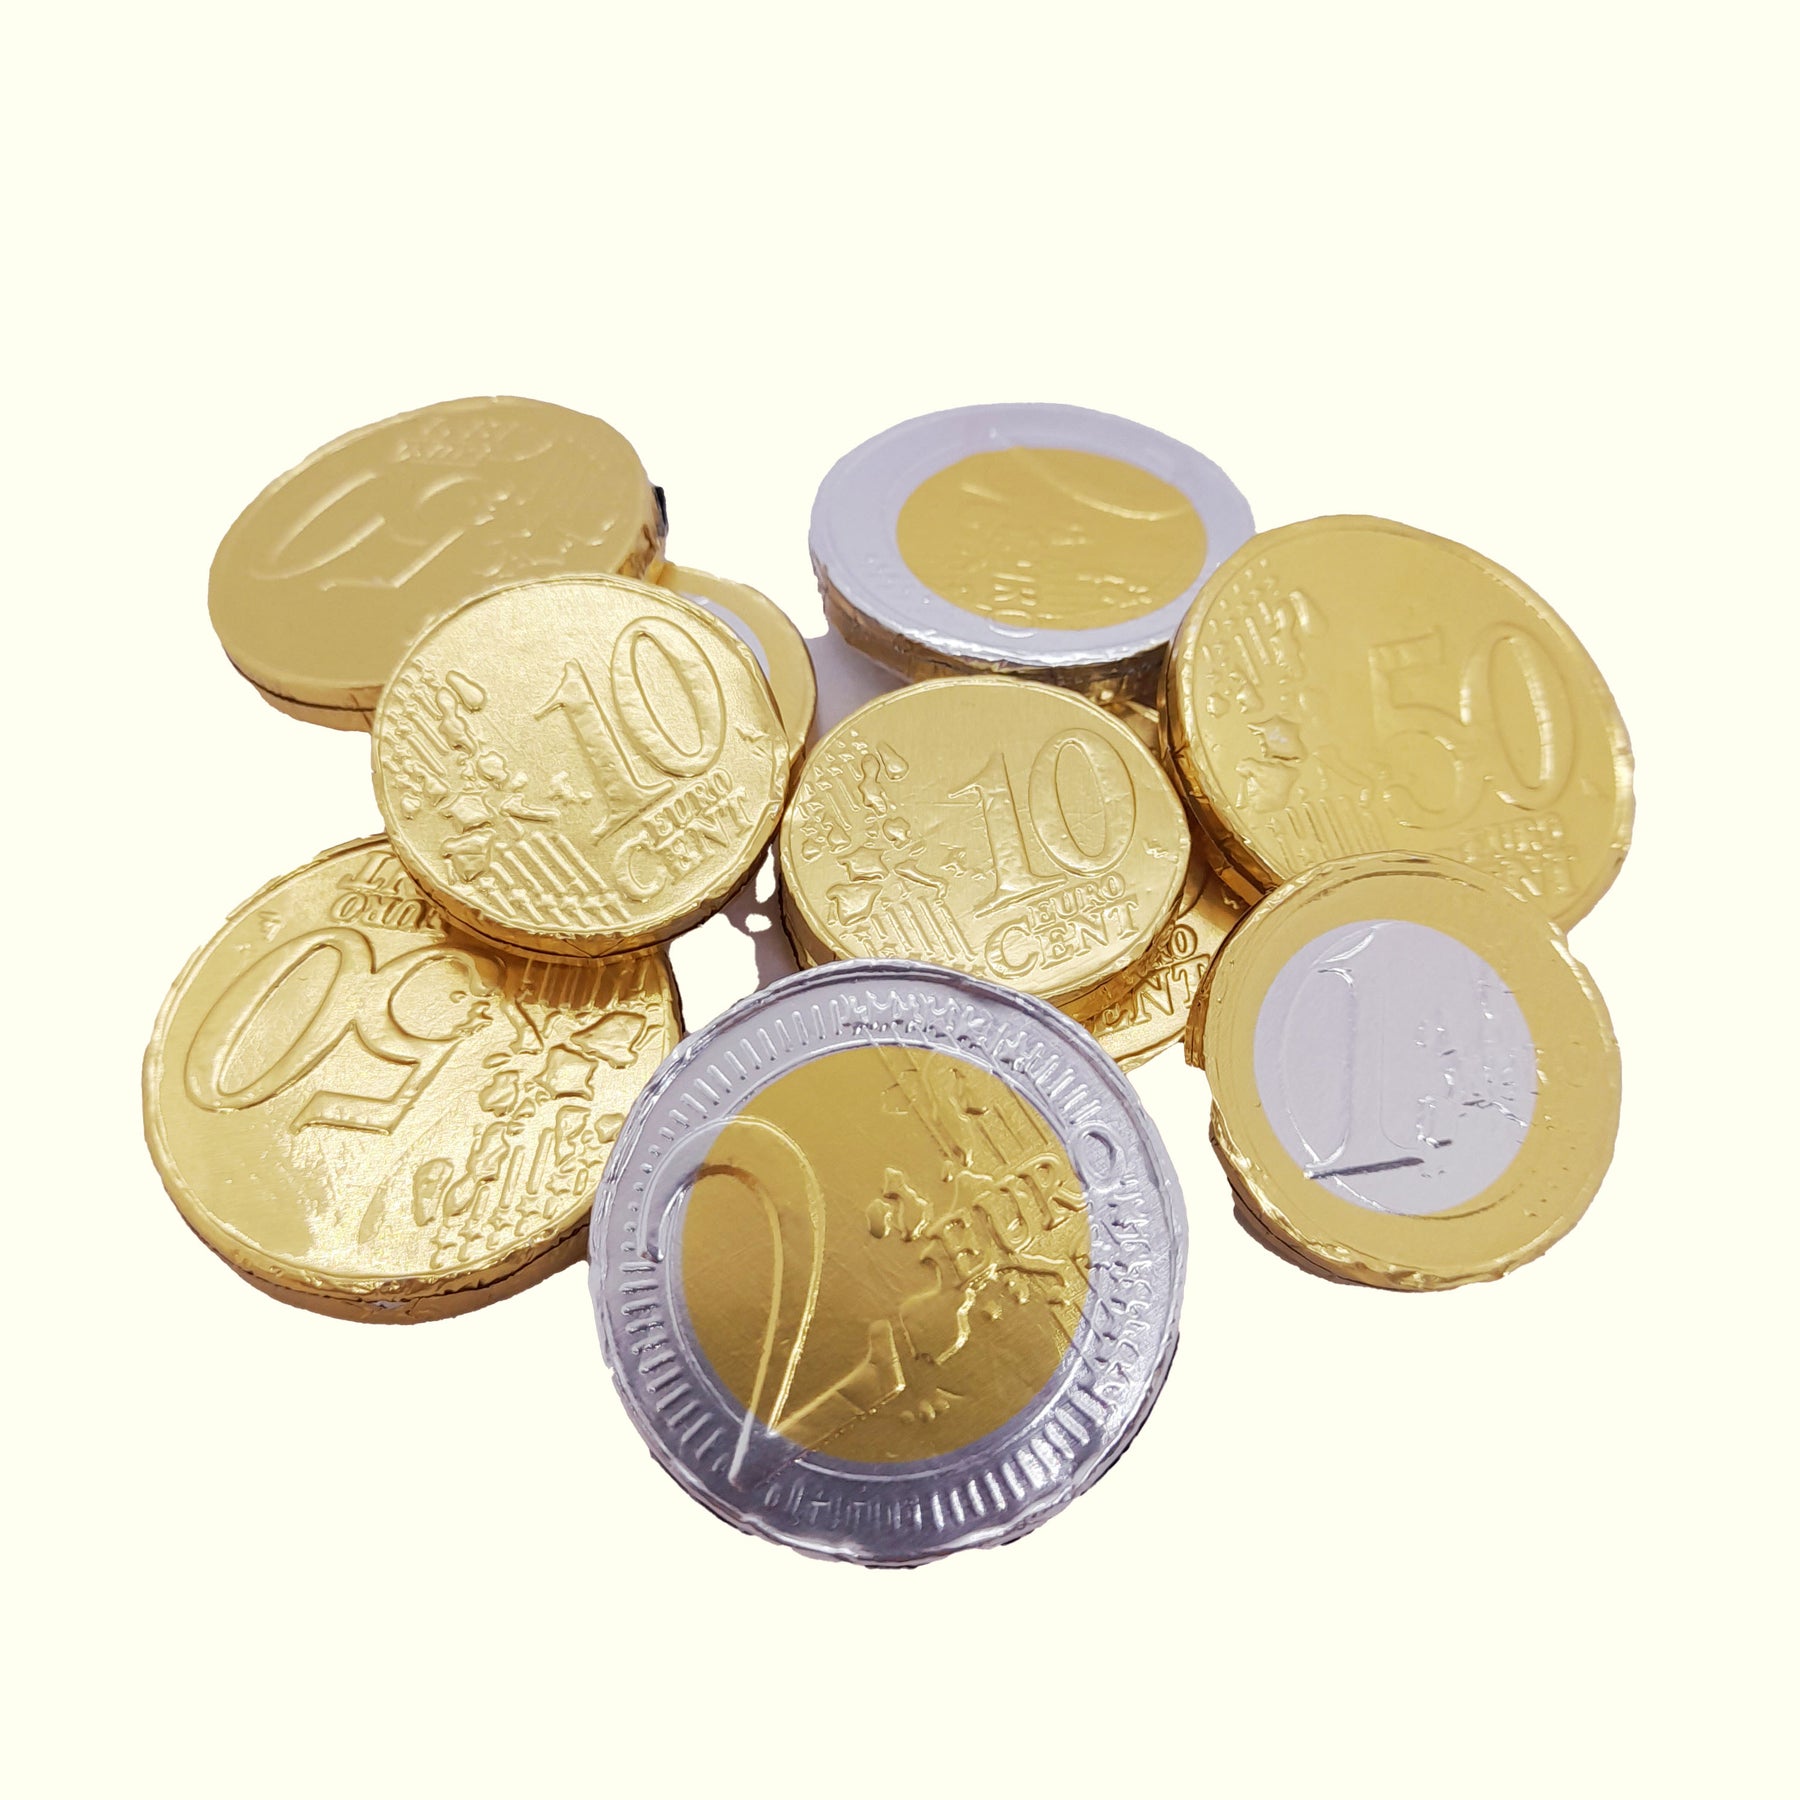 Böhme Goldtaler Schokoladengeld aus Milchschokoalde 100g